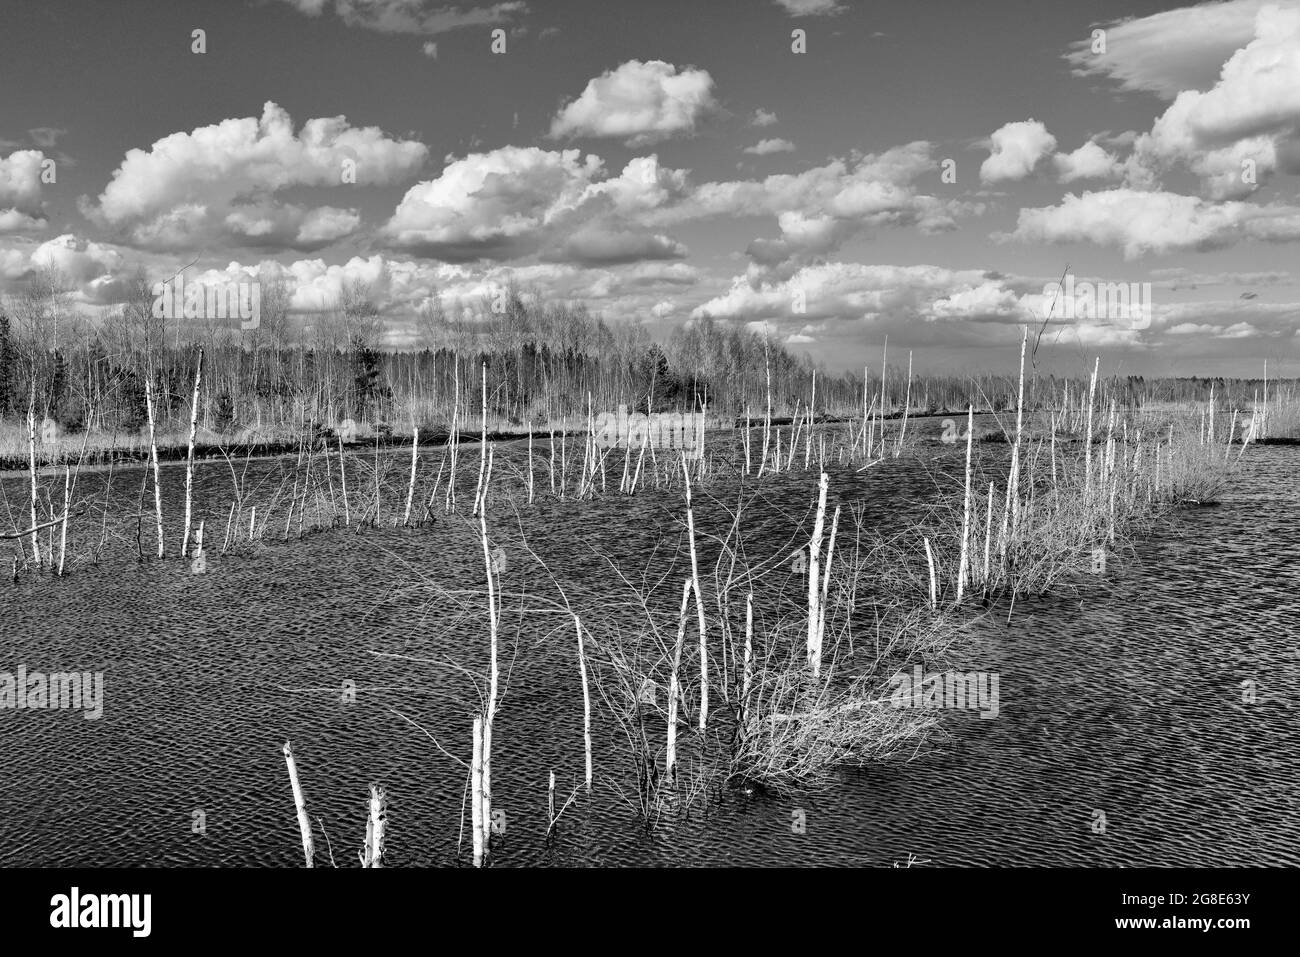 Dead birch trees (Betula pubescens) in a wet peat cutting area in a moor landscape, Grundbeckenmoor near Raubling, Scharzweiss photo Bavaria, Germany Stock Photo